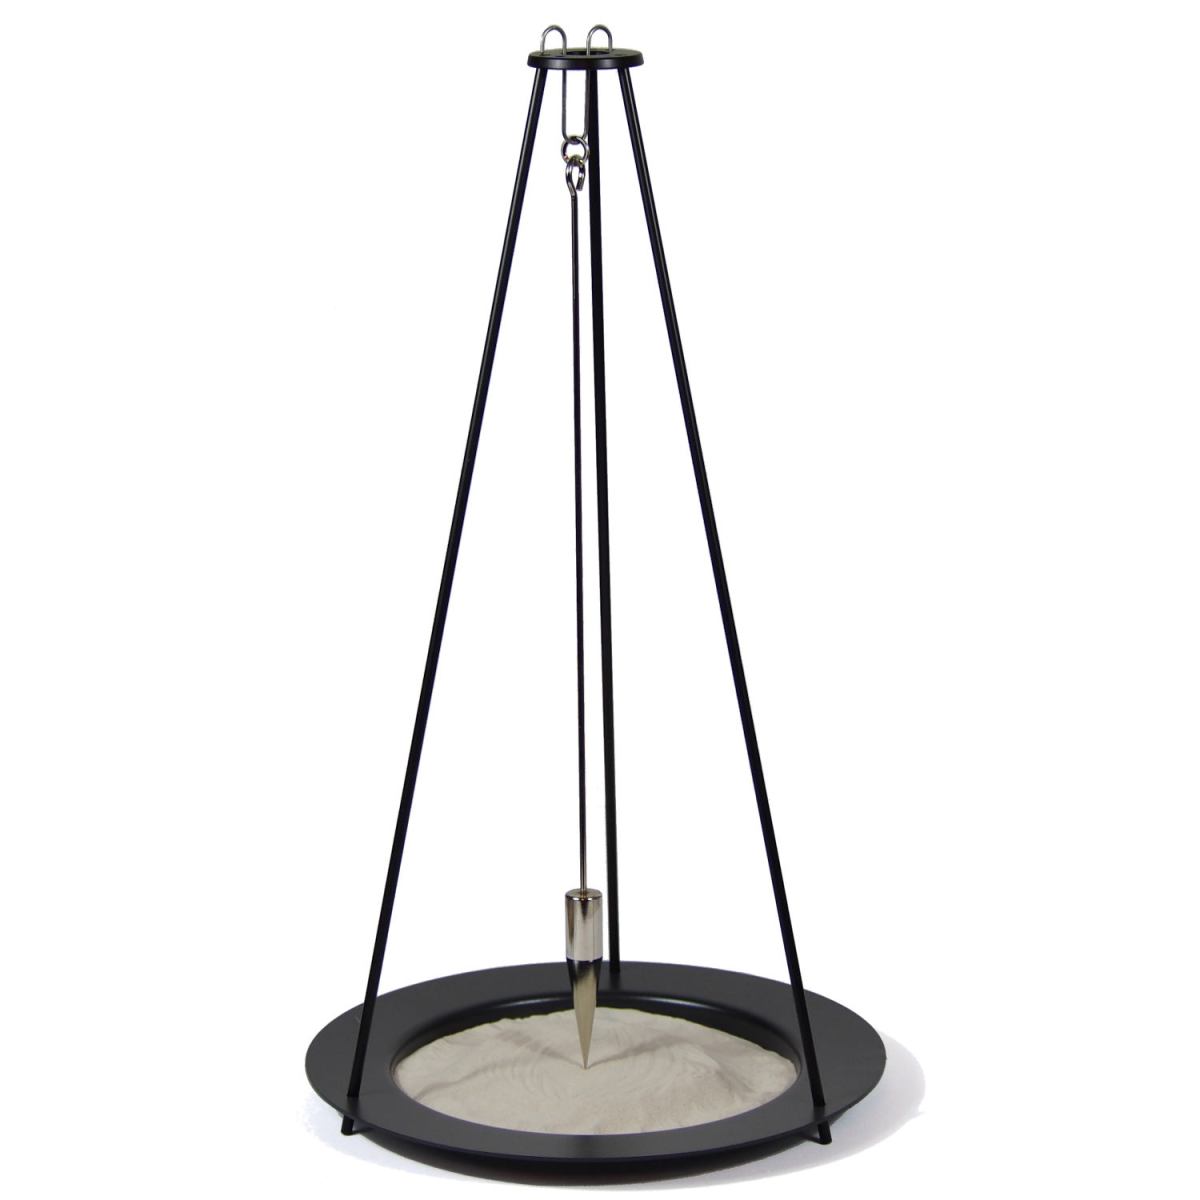 Standing Sand Pendulum made of Stainless Steel (Height 55 cm)